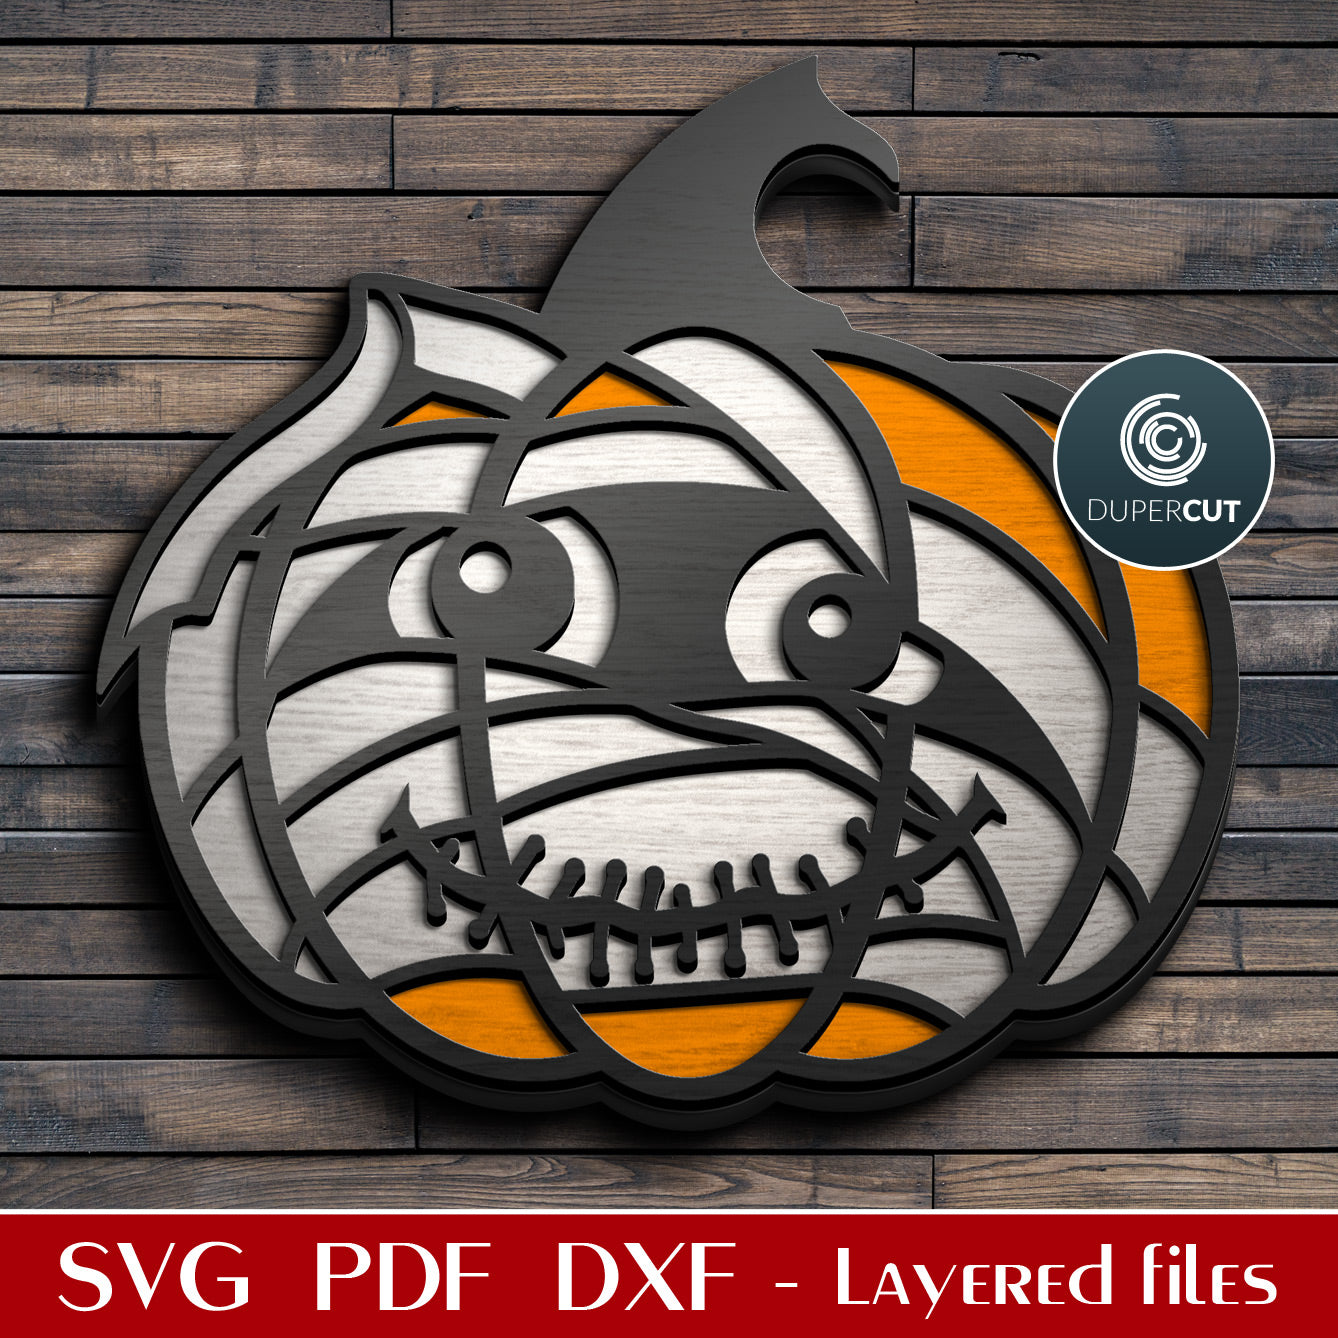 Cute mummy pumpkin Halloween decoration - SVG PNG DXF vector laser cutting files for Cricut, Glowforge, Silhouette, CNC plasma machines by DuperCut